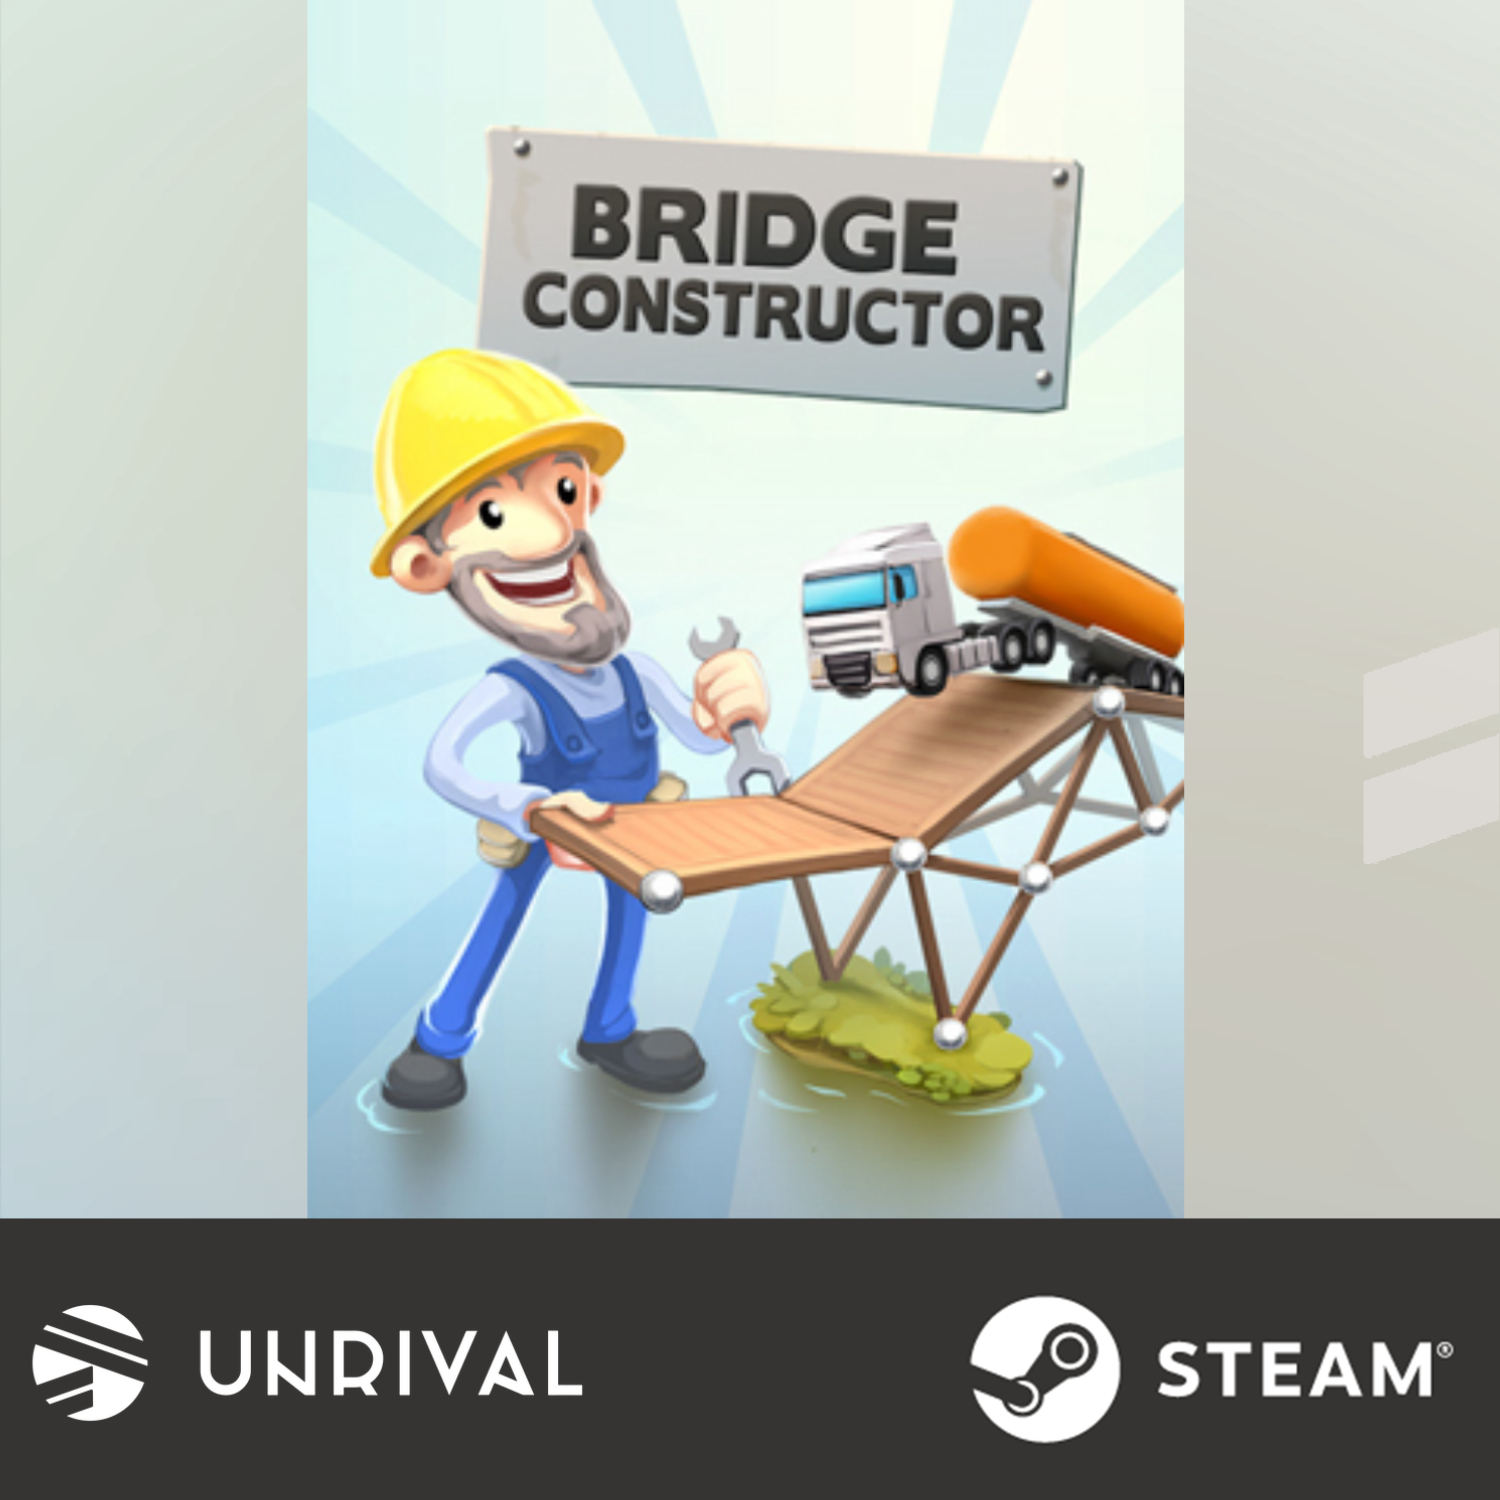 [Hot Sale] Bridge Constructor PC Digital Download Game (Single Player) - Unrival